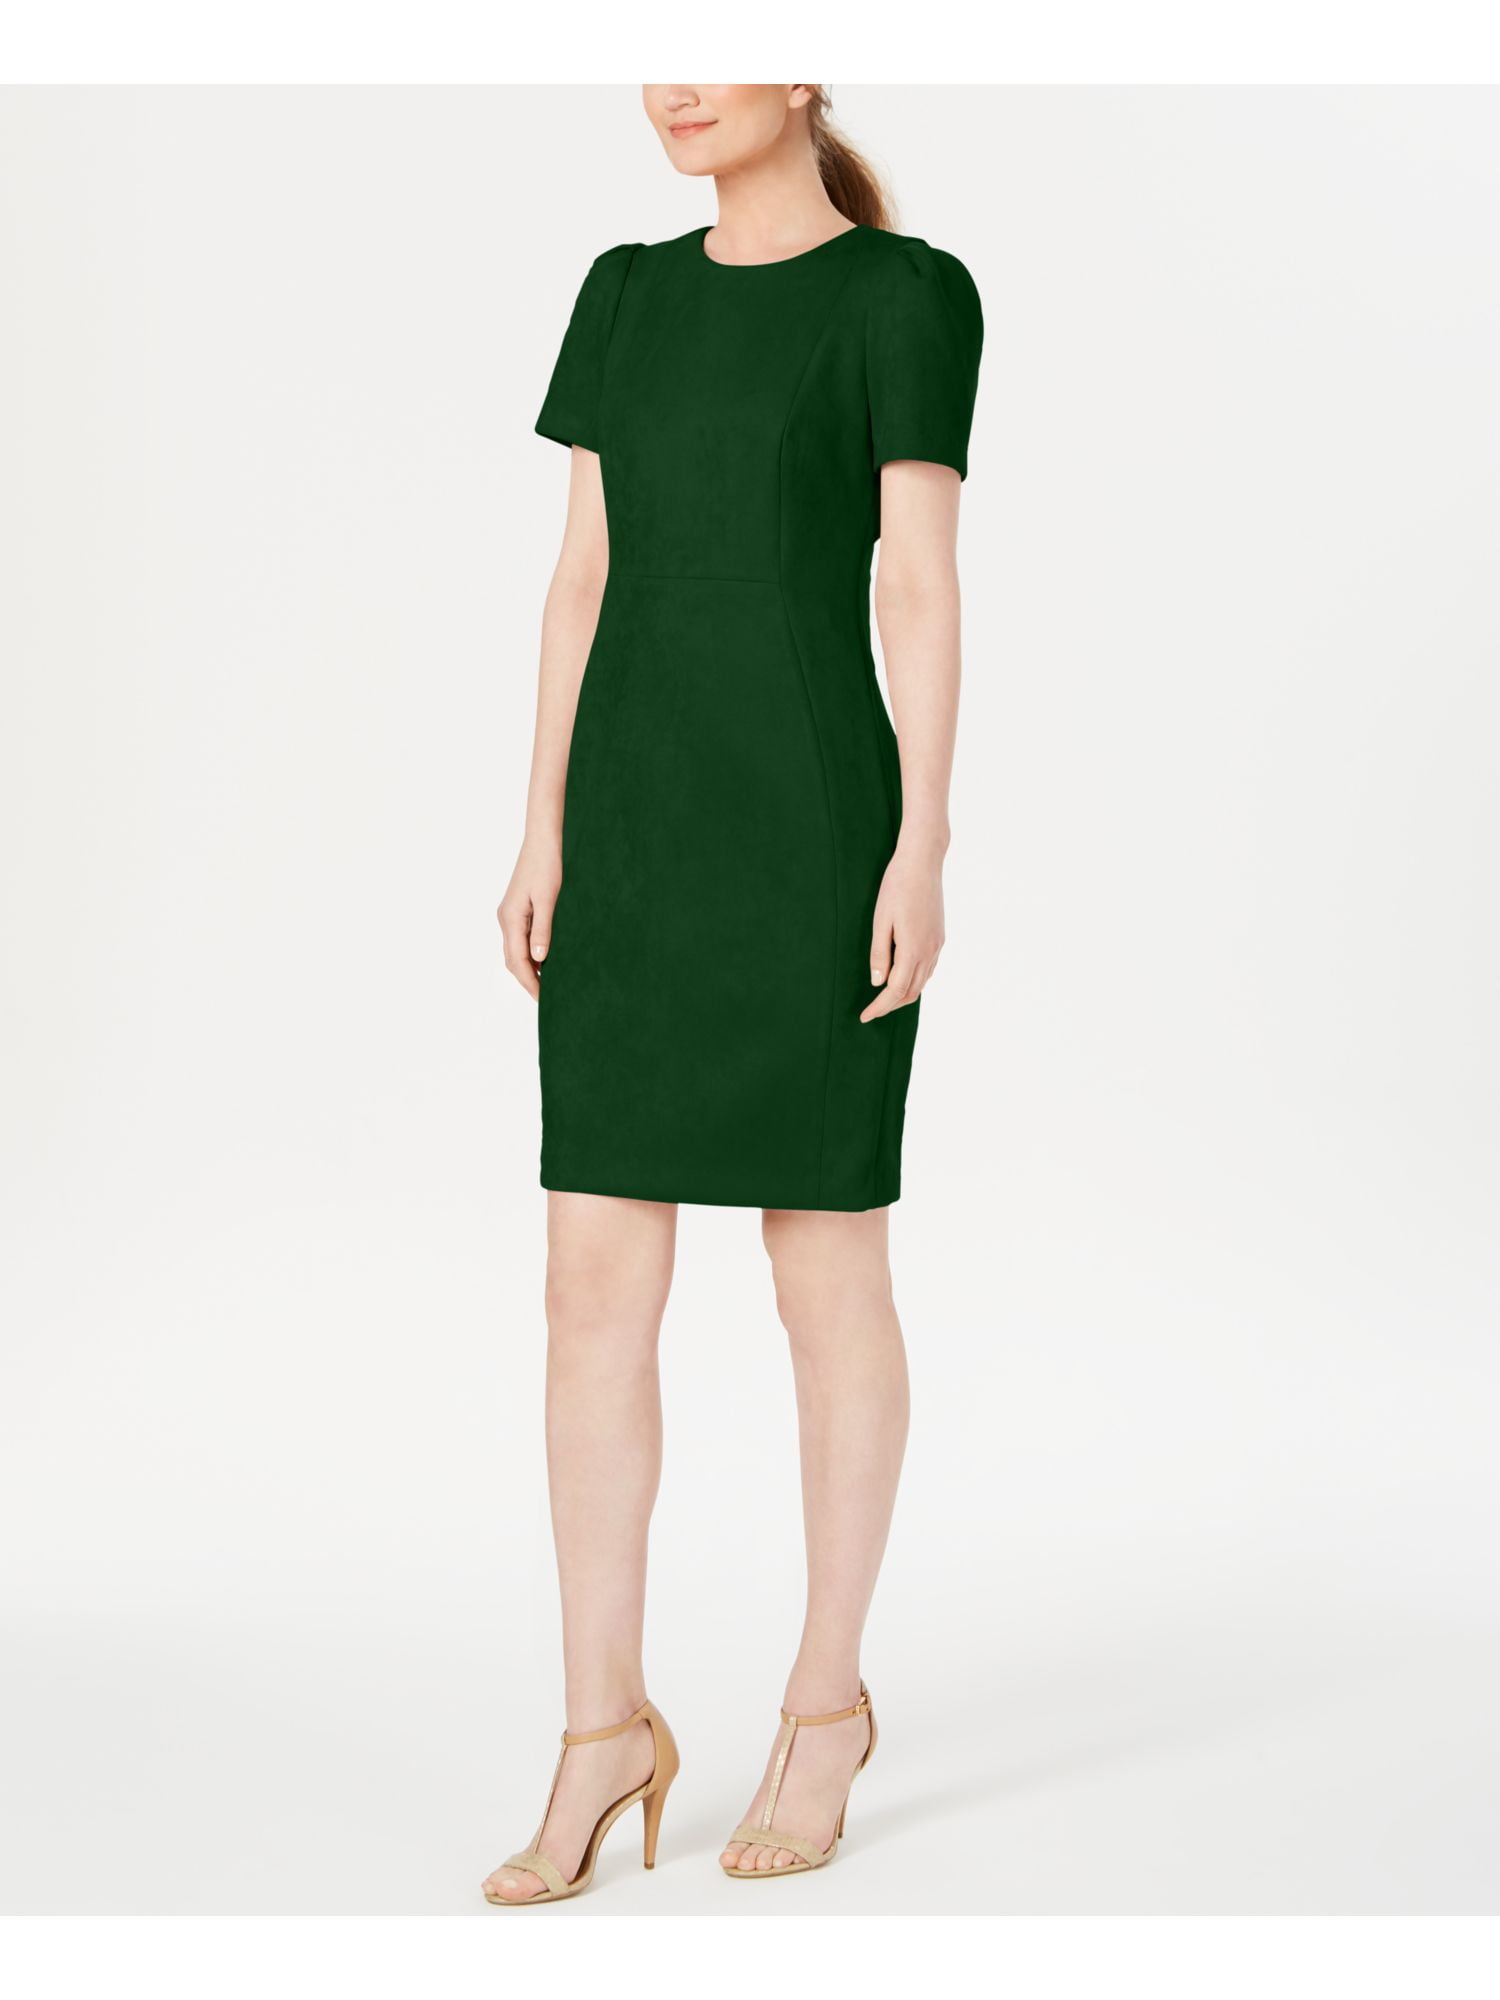 CALVIN KLEIN Womens Green Short Sleeve Short Sheath Party Dress Size: 14 -  